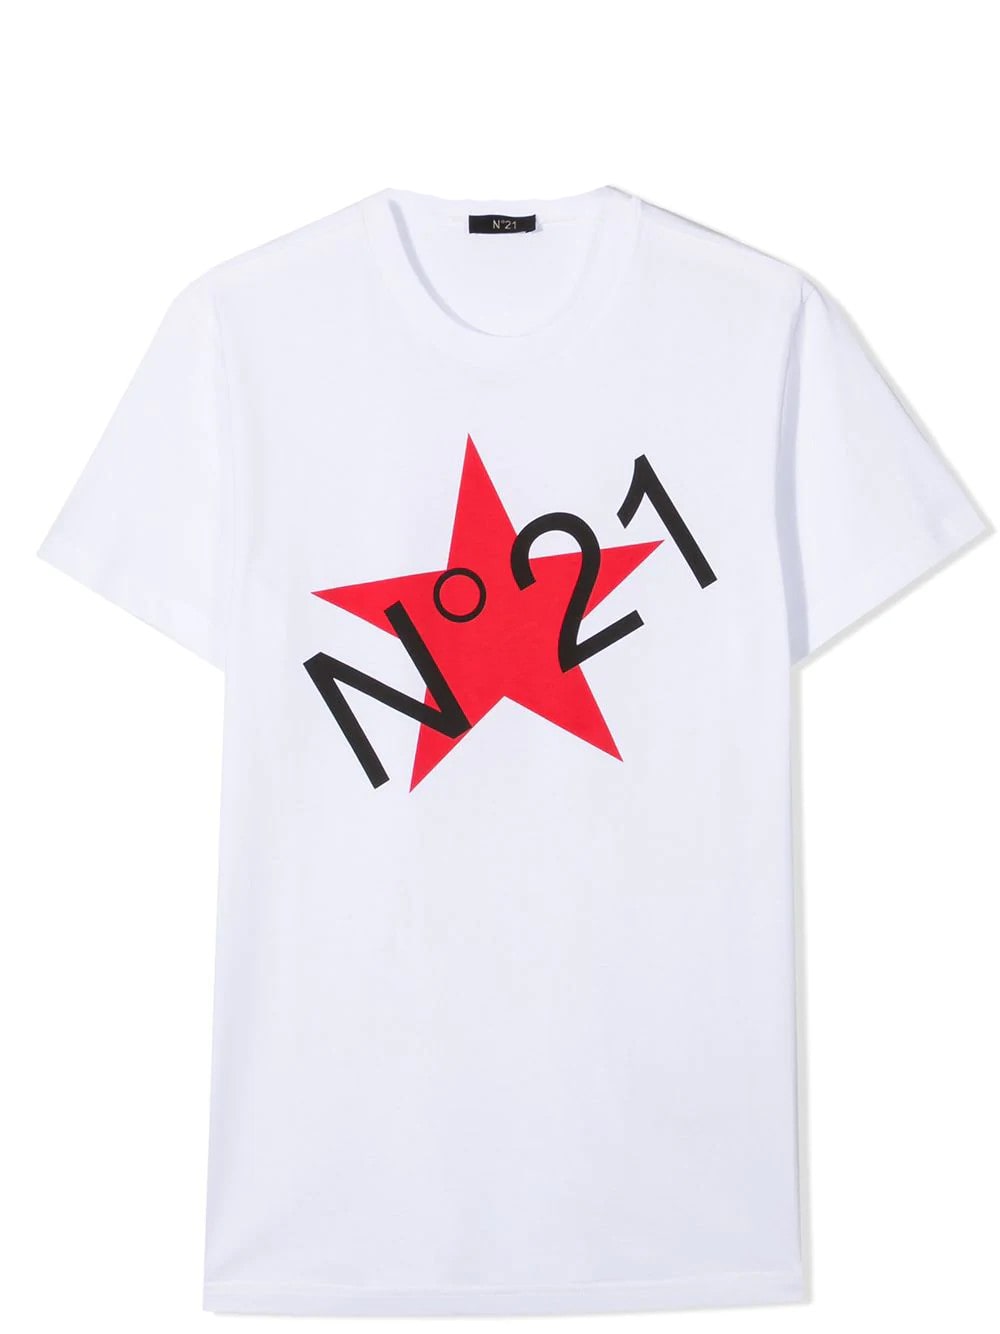 N.21 Print T-shirt